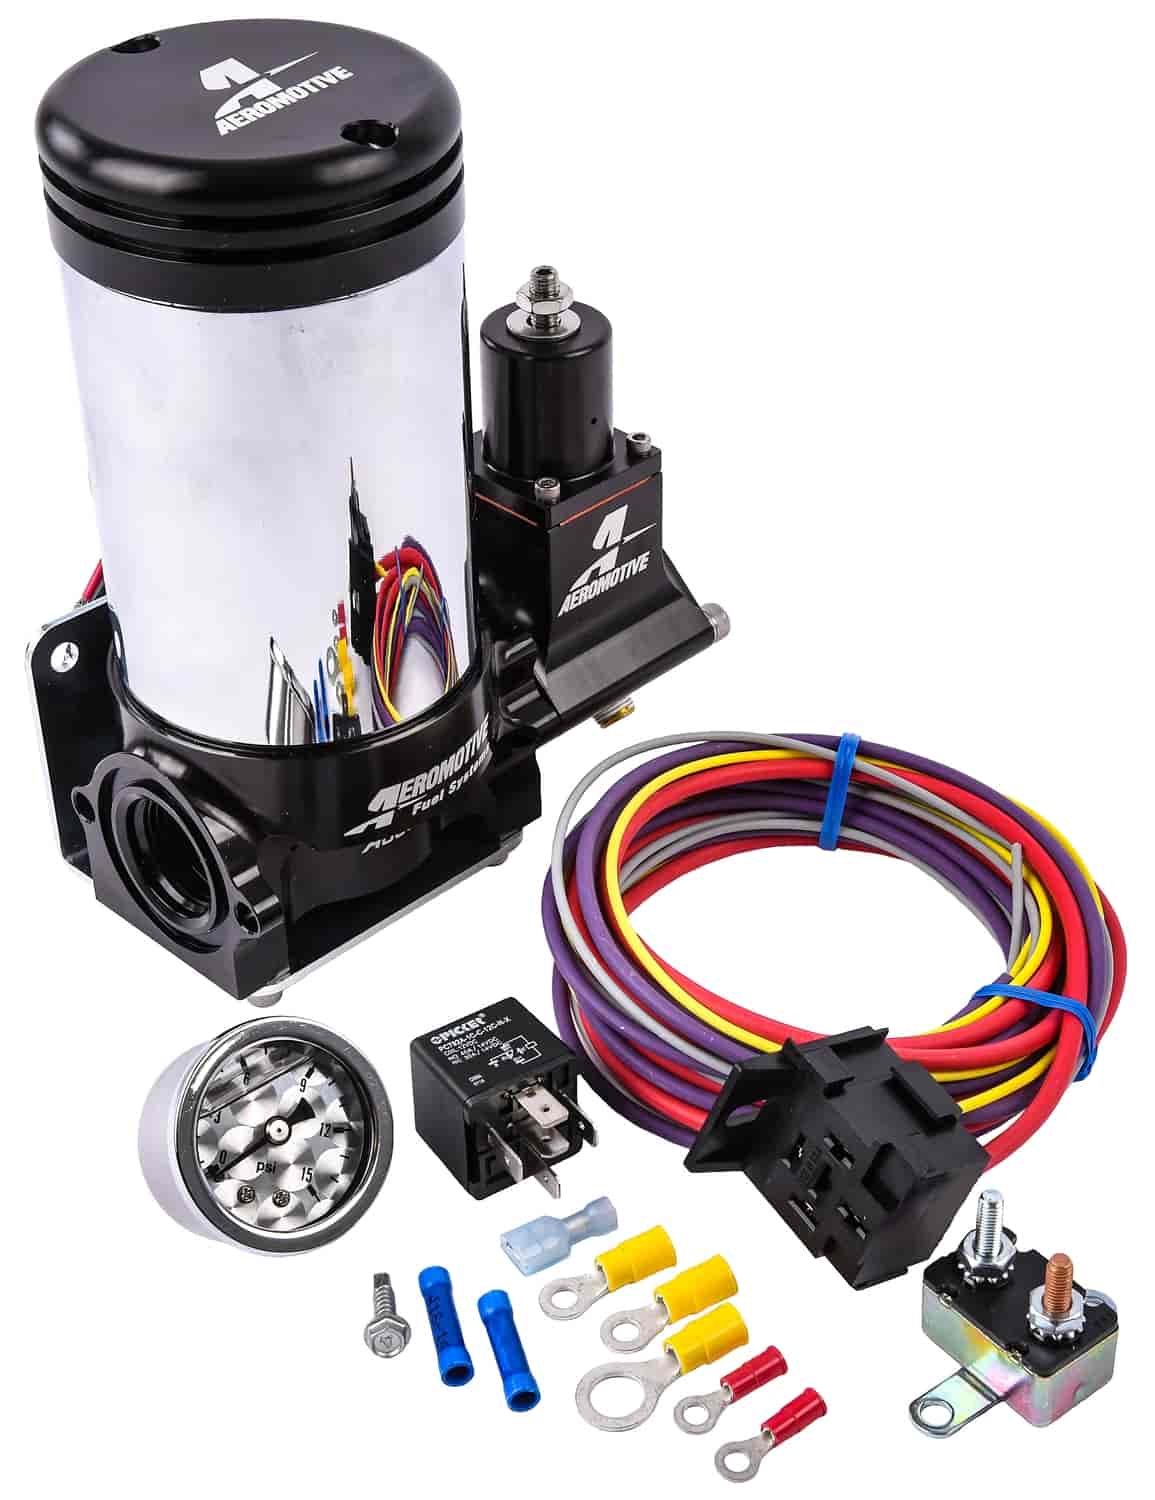 A3000 Fuel Pump Kit Includes: Aeromotive Fuel Pump